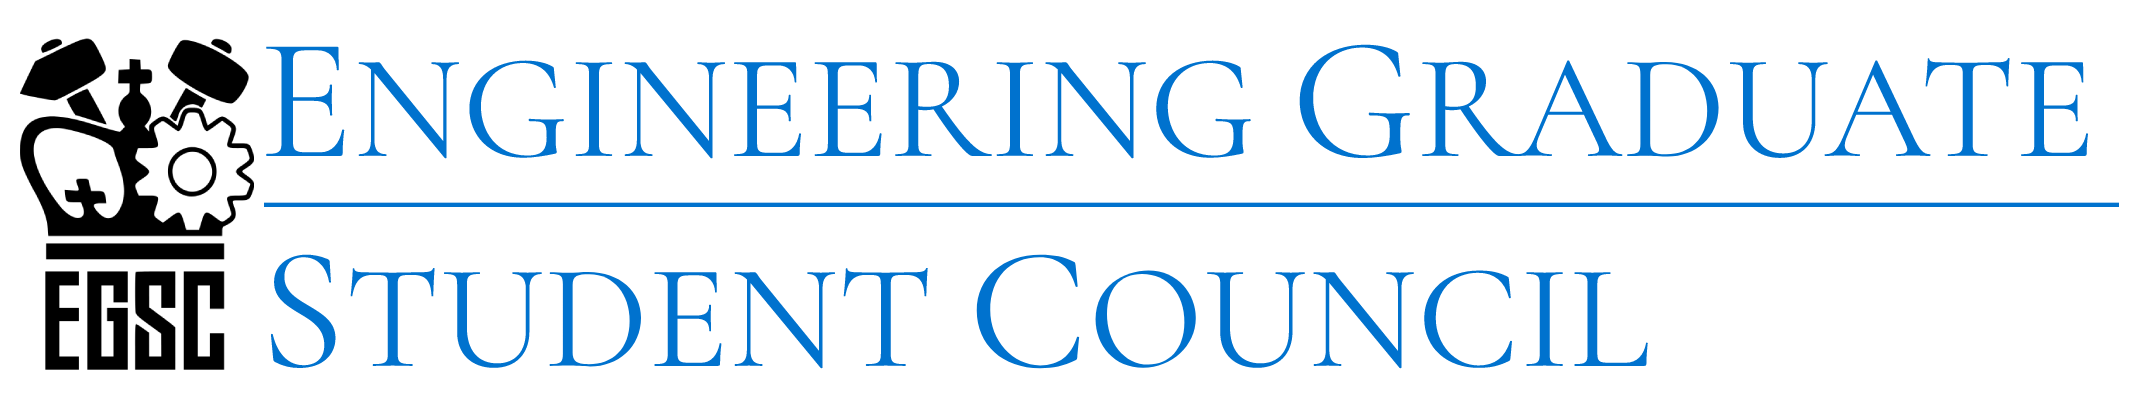 Engineering Graduate Student Council of Columbia University logo